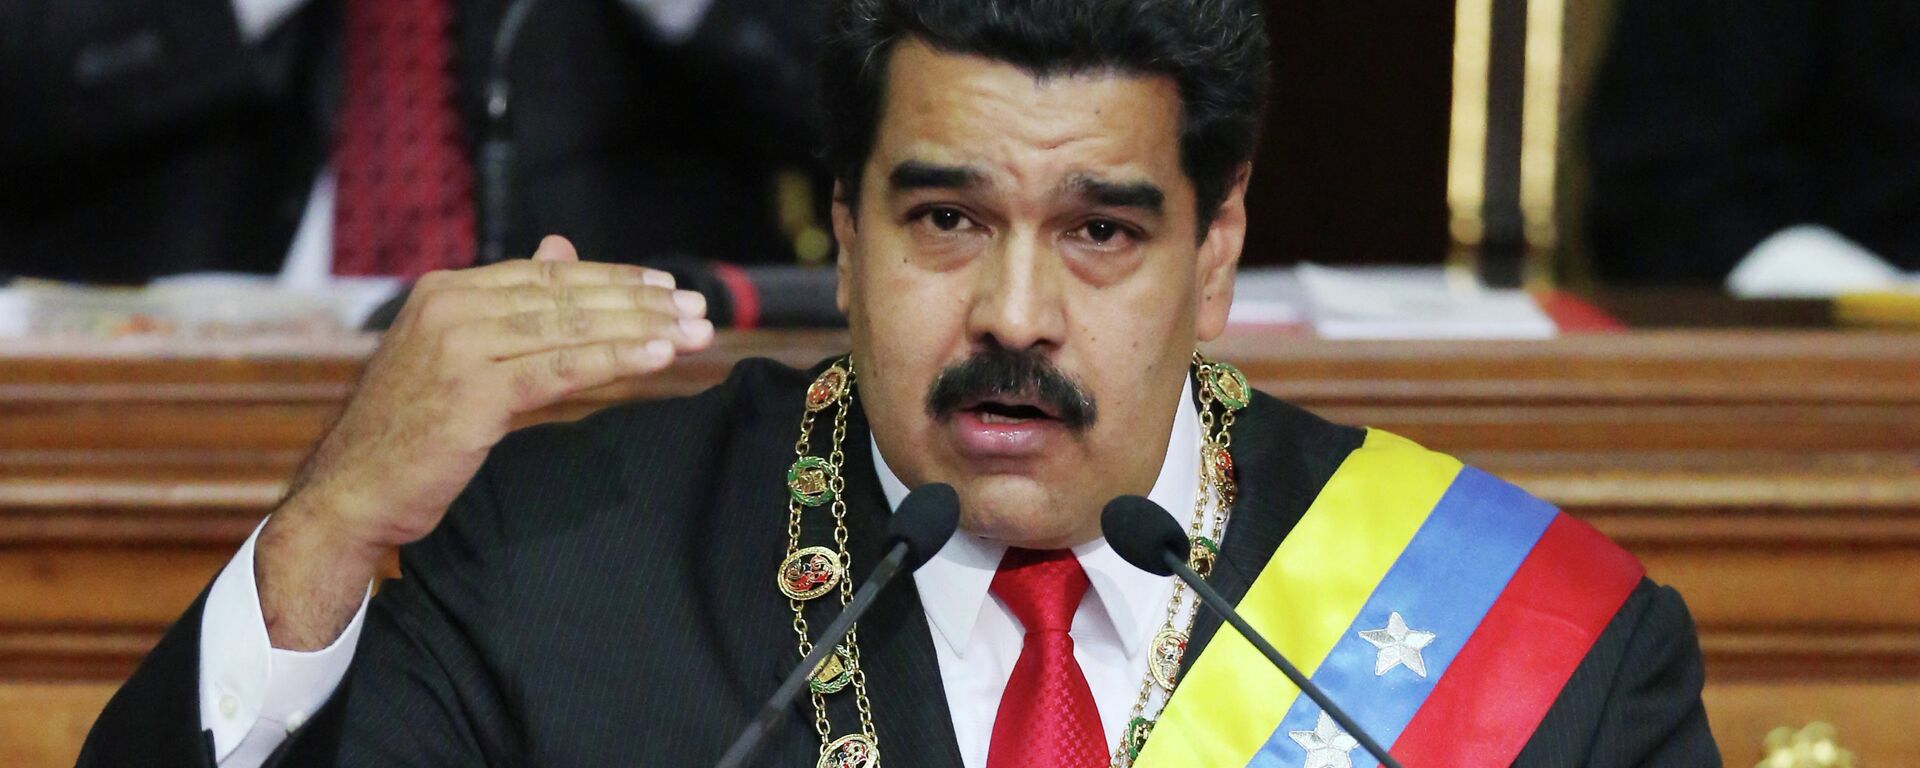 Venezuela's President Nicolas Maduro, speaks during the annual state-of-the-nation address at the National Assembly in Caracas, Venezuela, Wednesday, Jan 21, 2015 - Sputnik Mundo, 1920, 28.06.2021